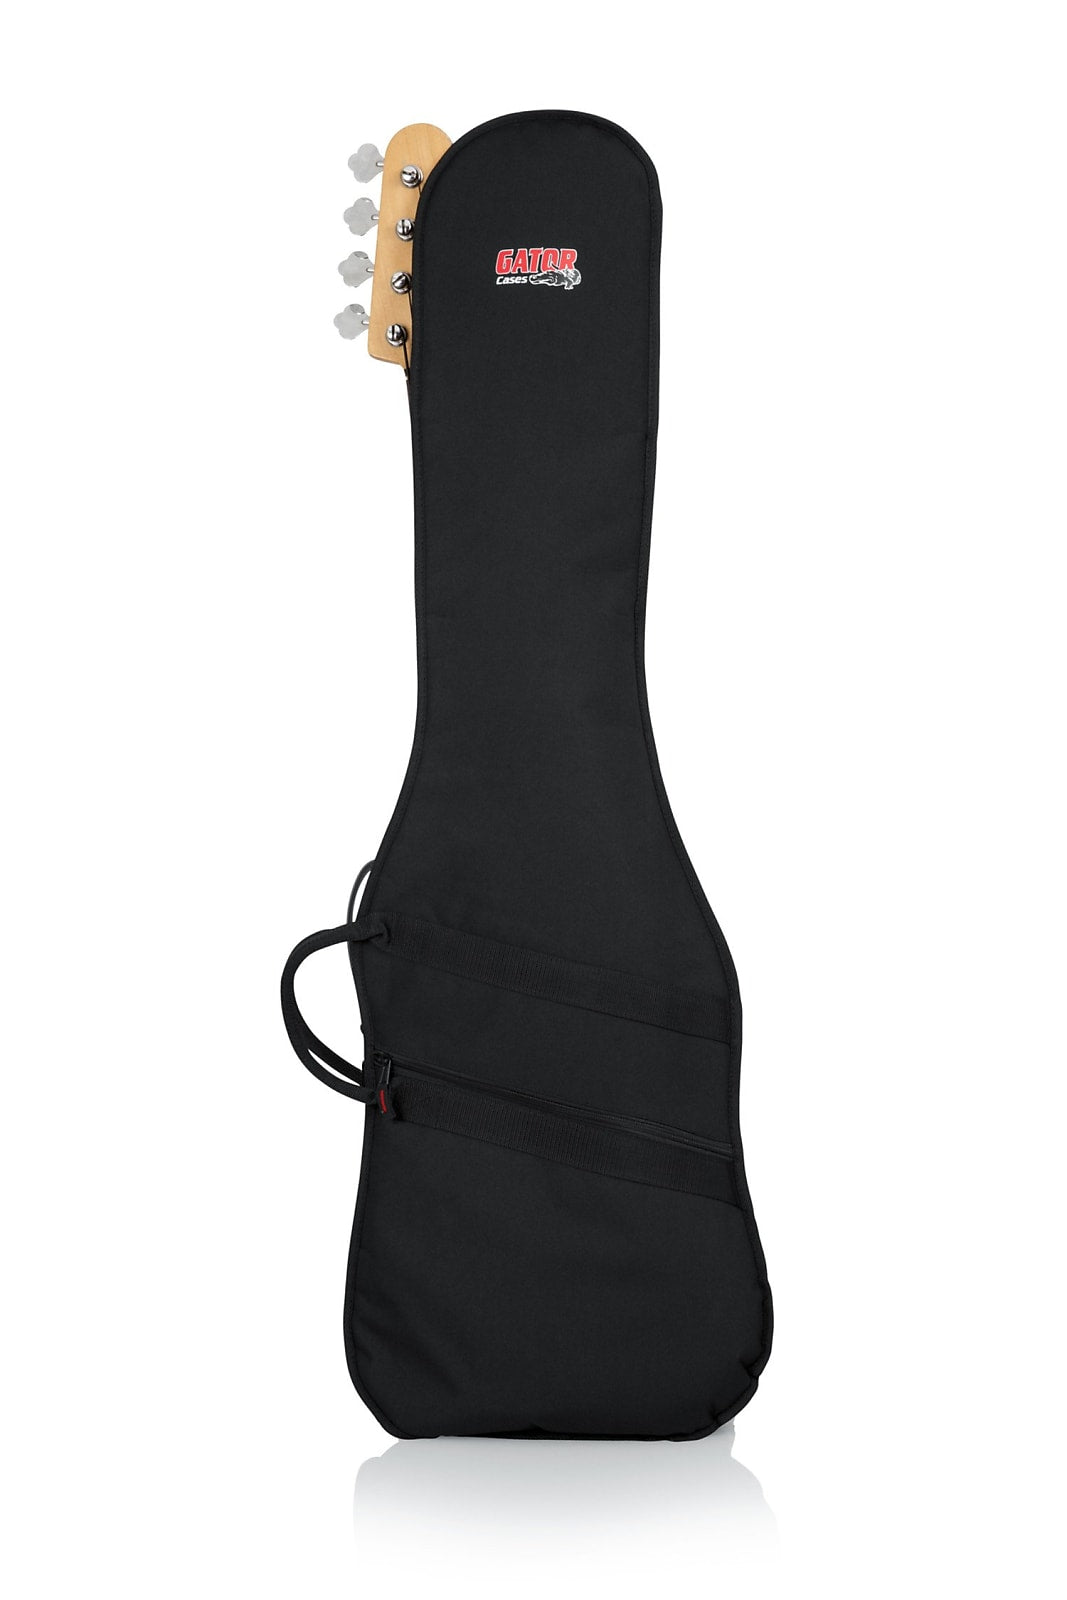 Gator GBE Bass Guitar Gig Bag